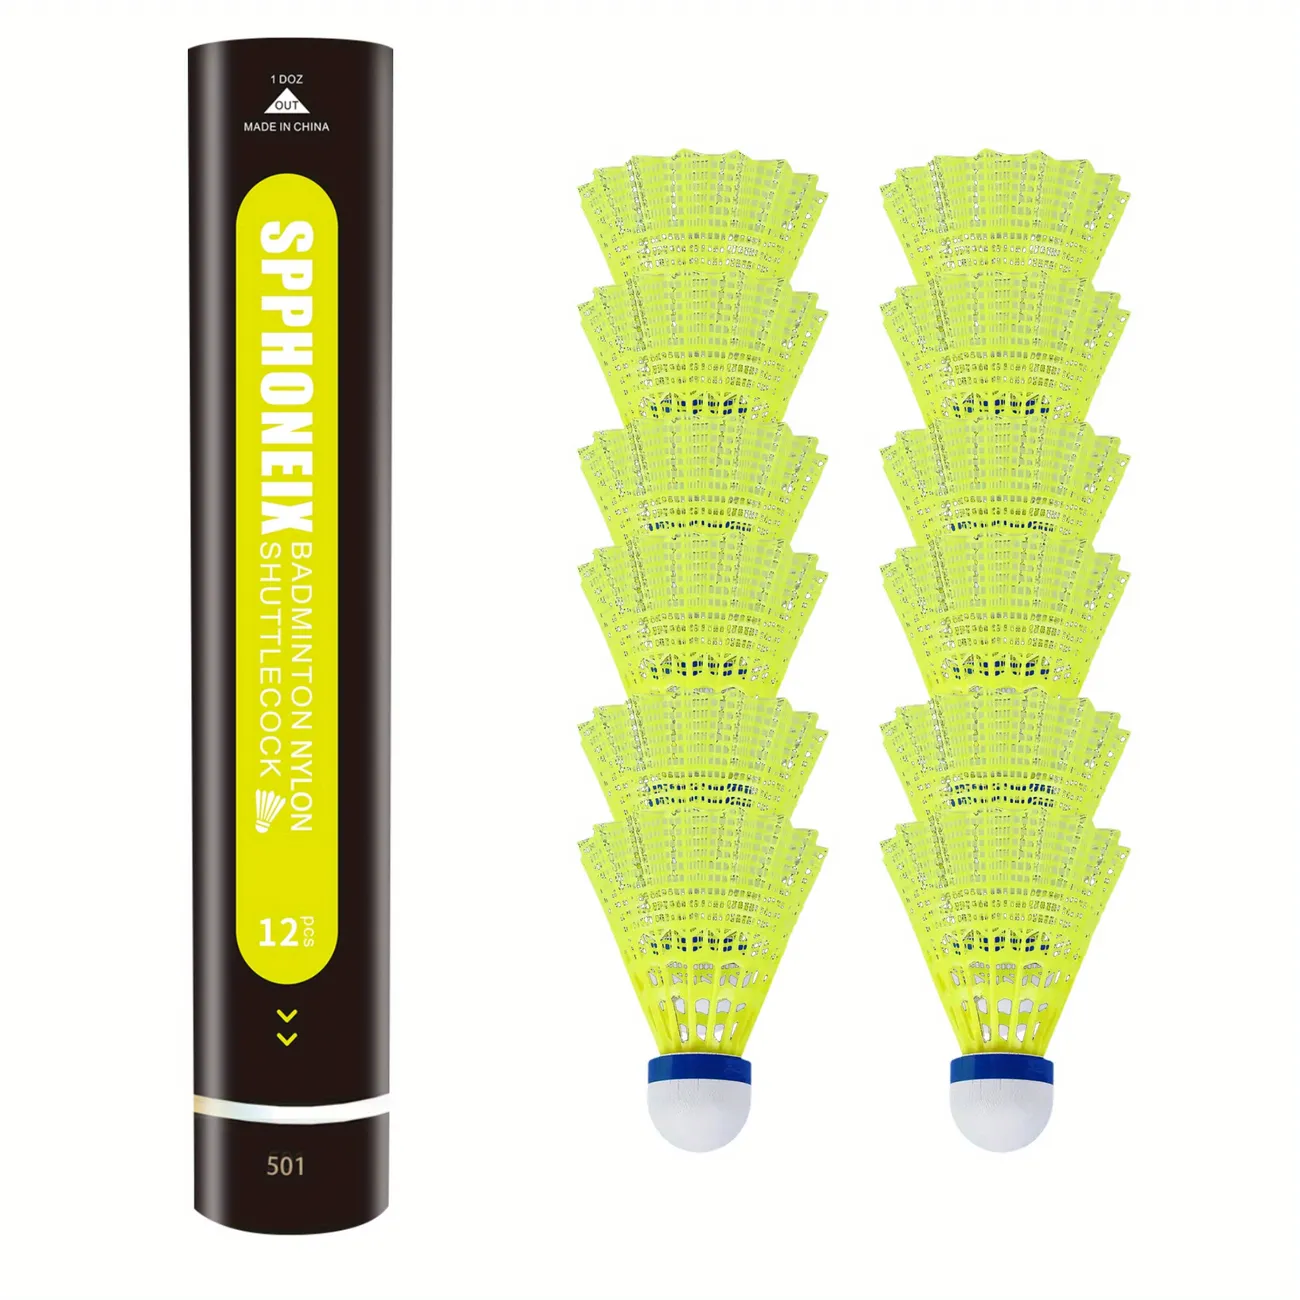 Durable Nylon Badminton Shuttlecocks - High Speed and Durability For High-quality Play!